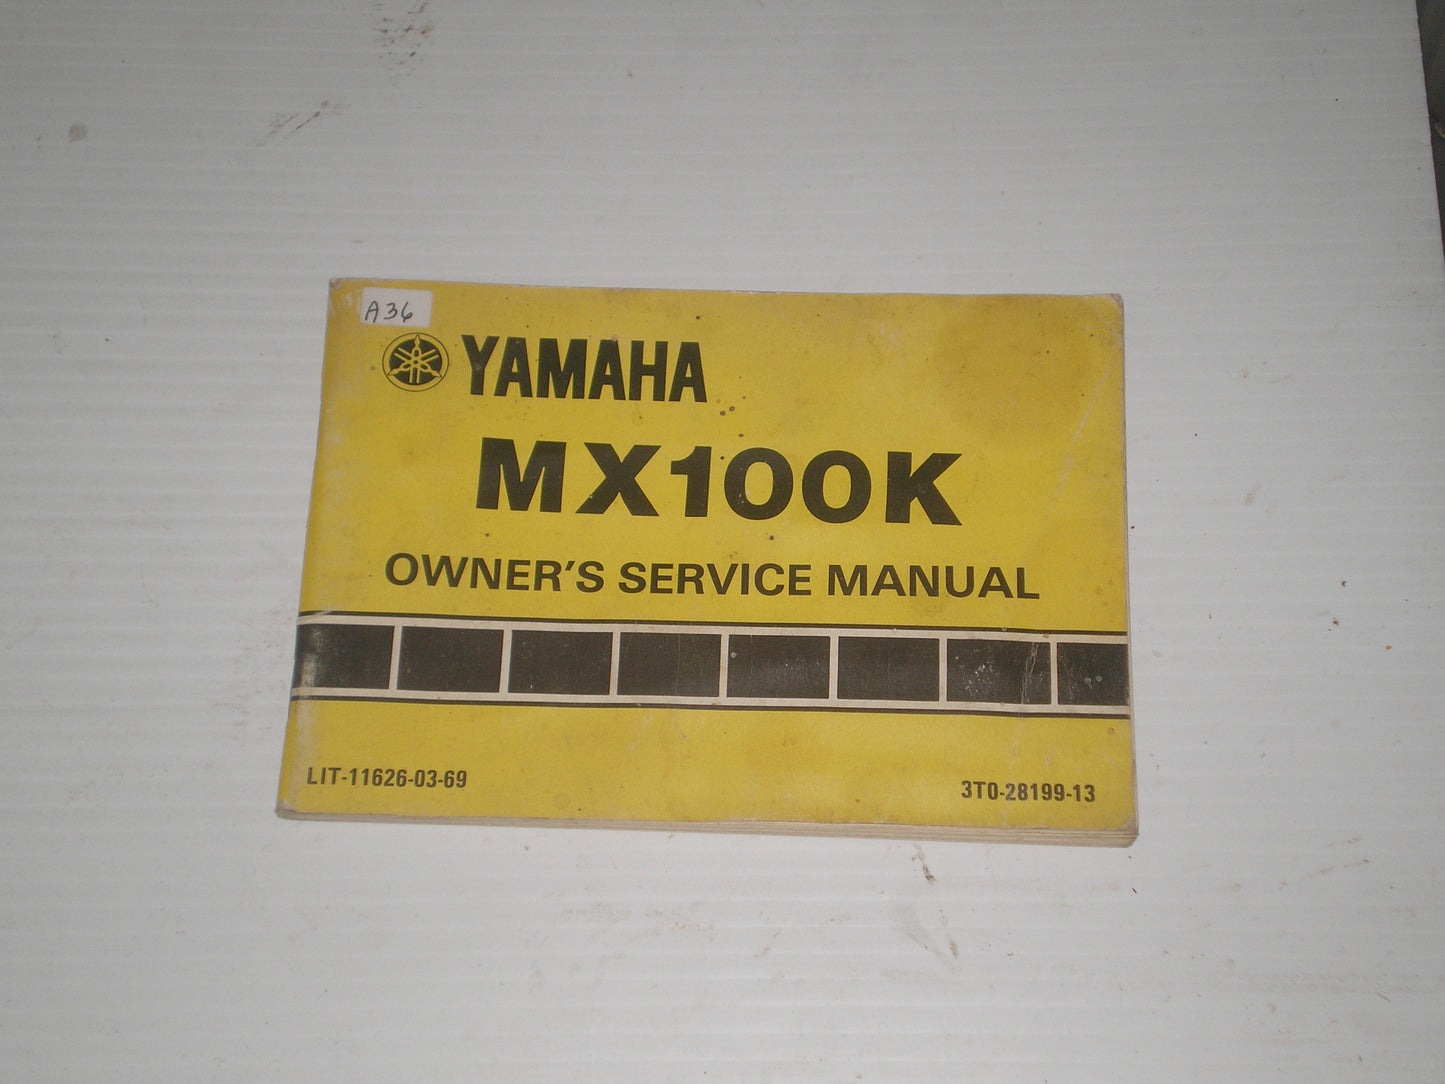 YAMAHA MX100 K  Owner's Service Manual  3T0-28199-13  LIT-11626-03-69  #A36